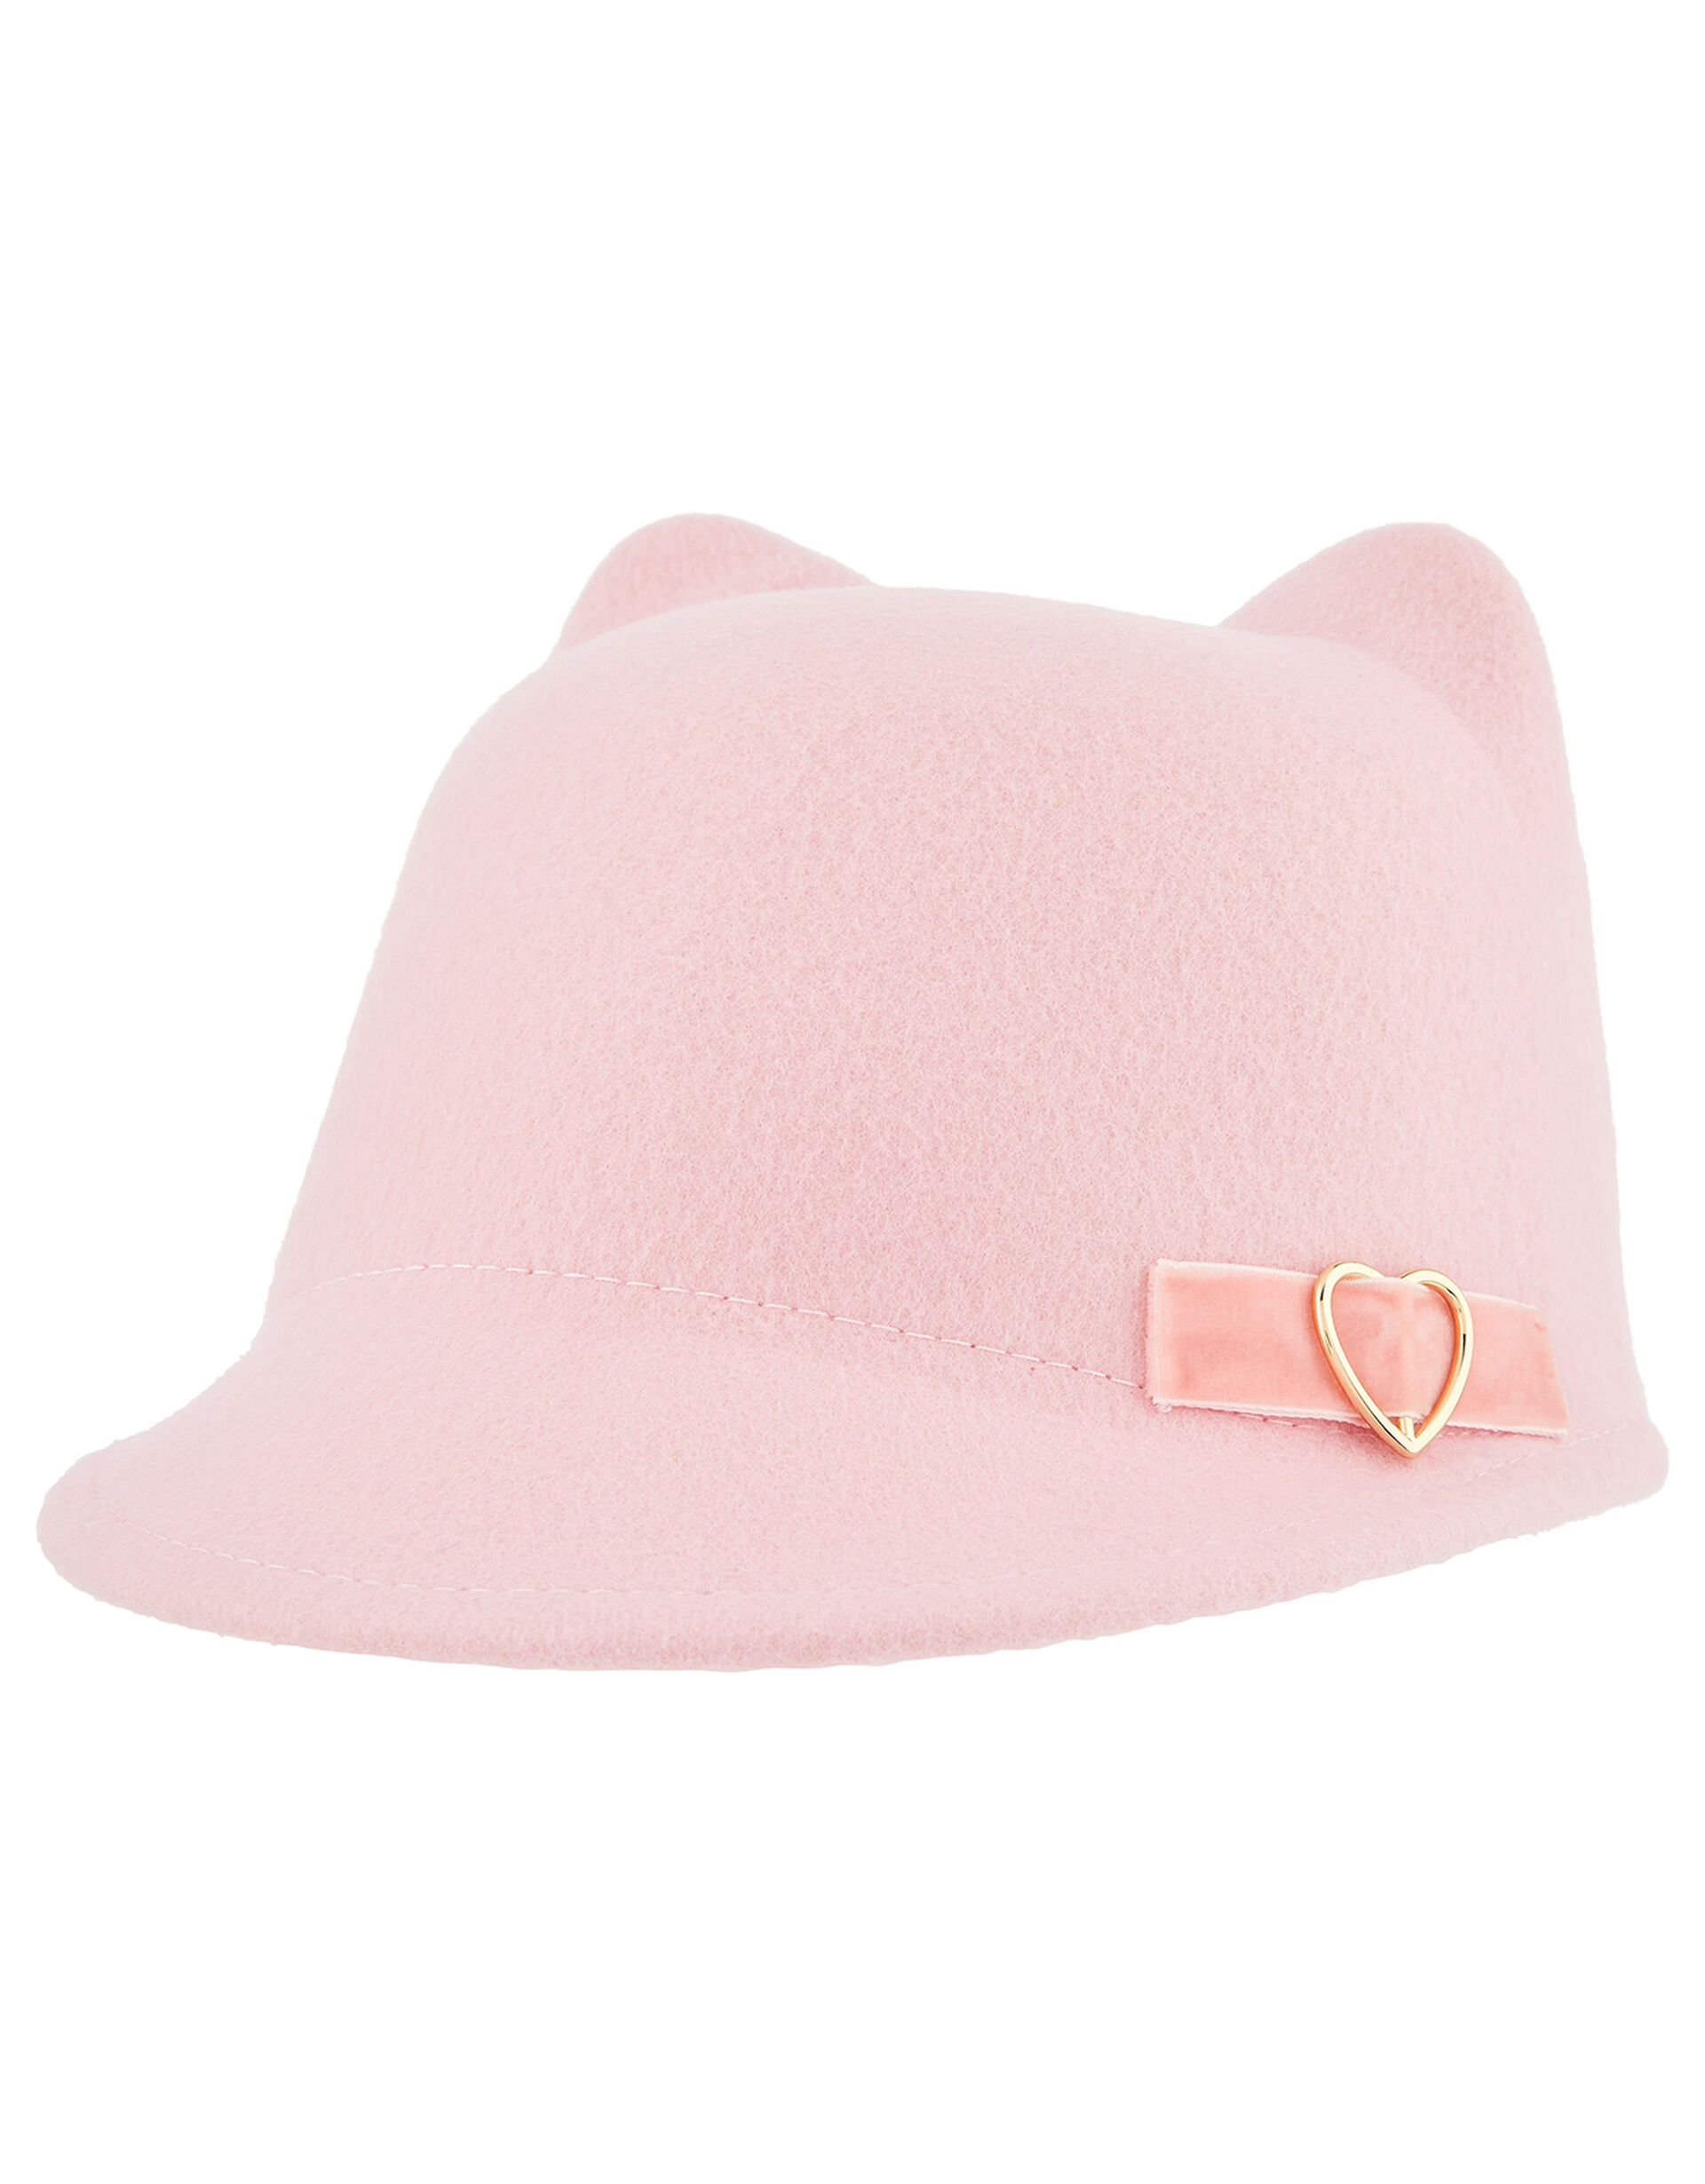 Penny Ribbon Cat Bowler Hat, Pink (PINK), large